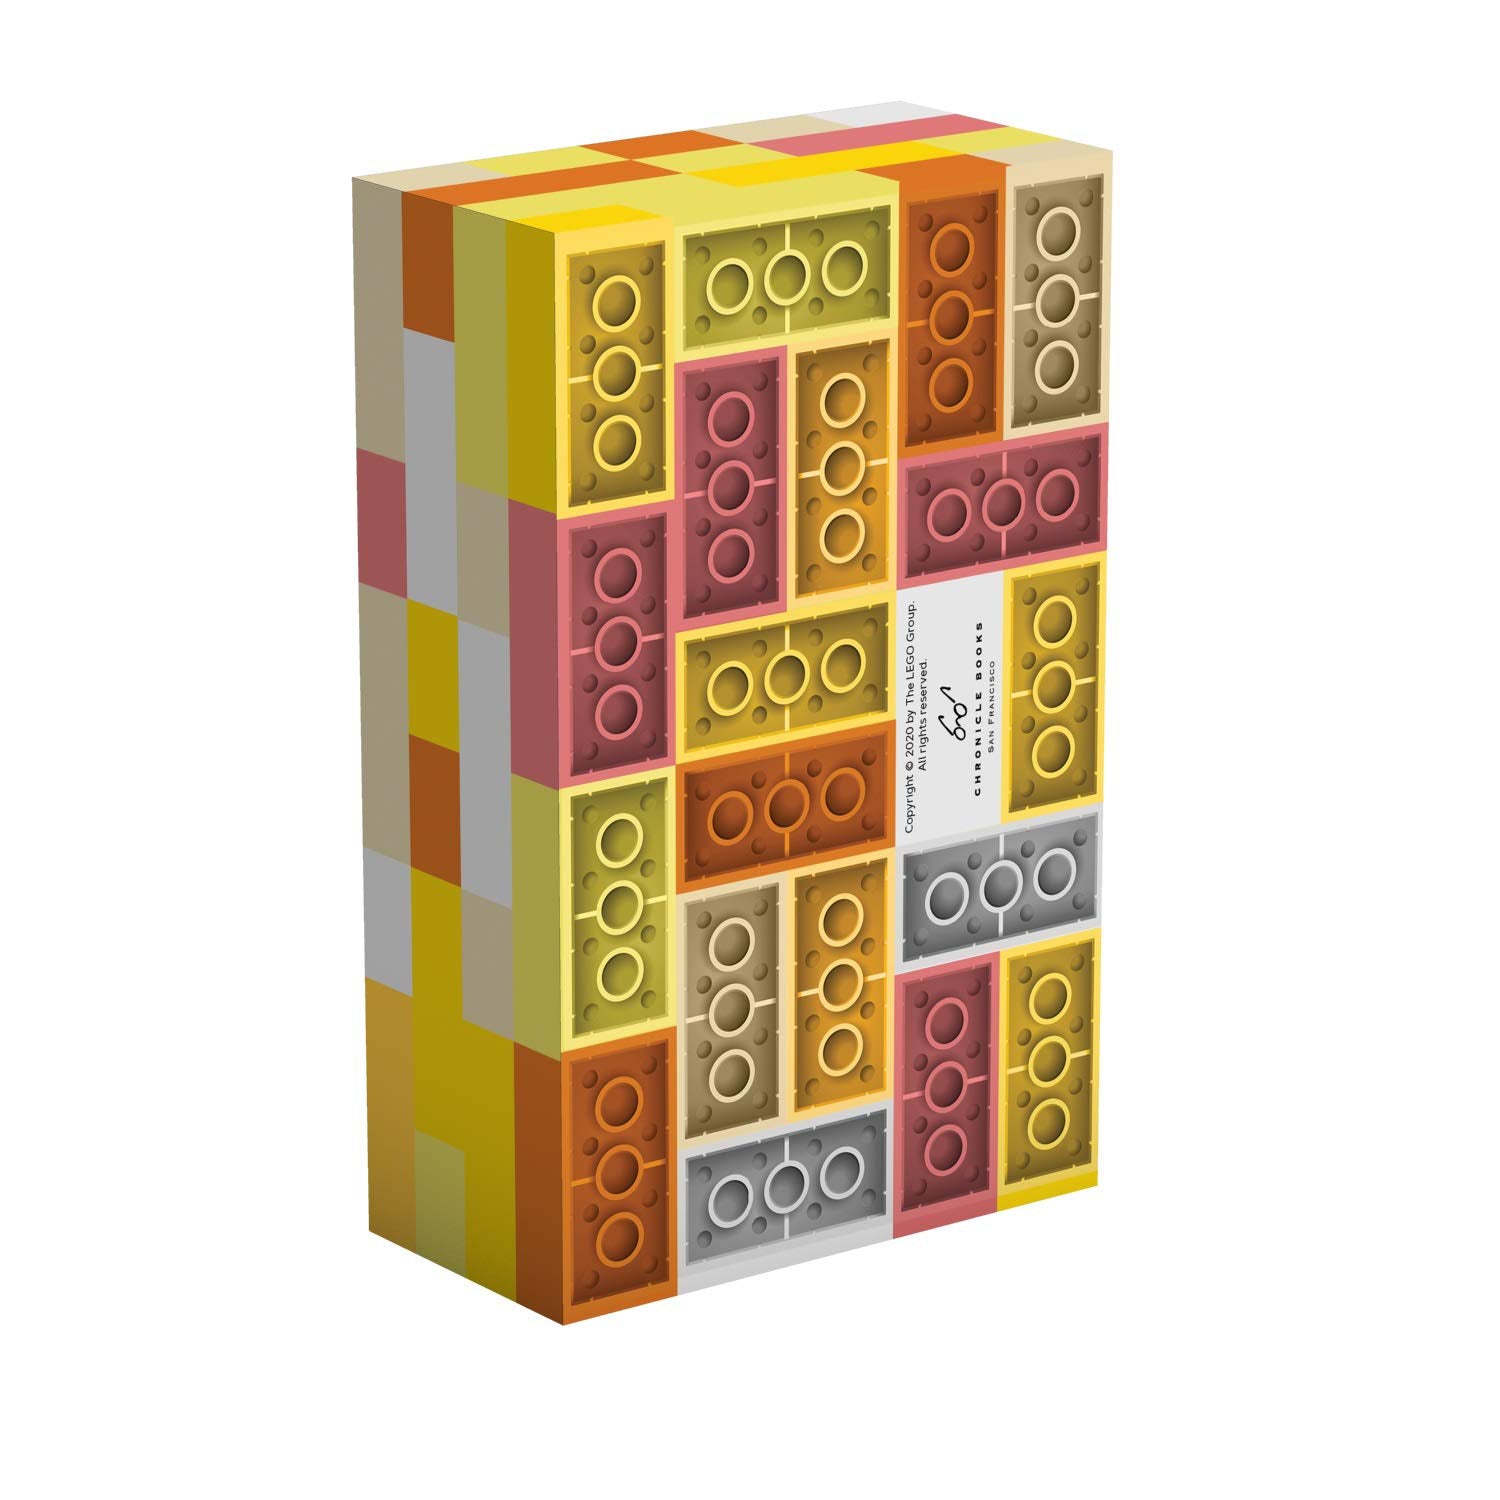 book-lego-note-brick-yellow-orange- (3)